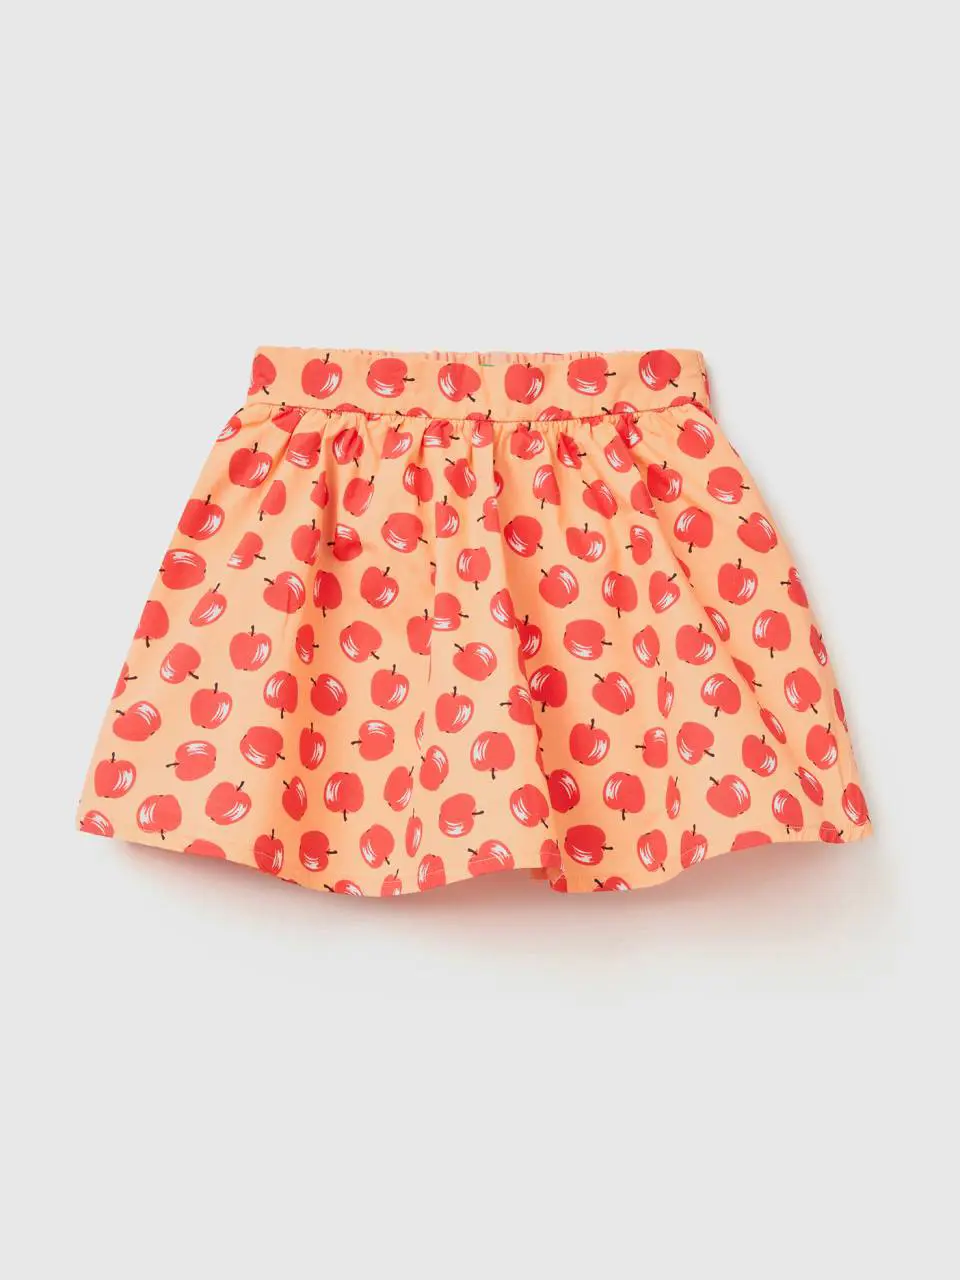 Benetton pink skirt with apple pattern. 1